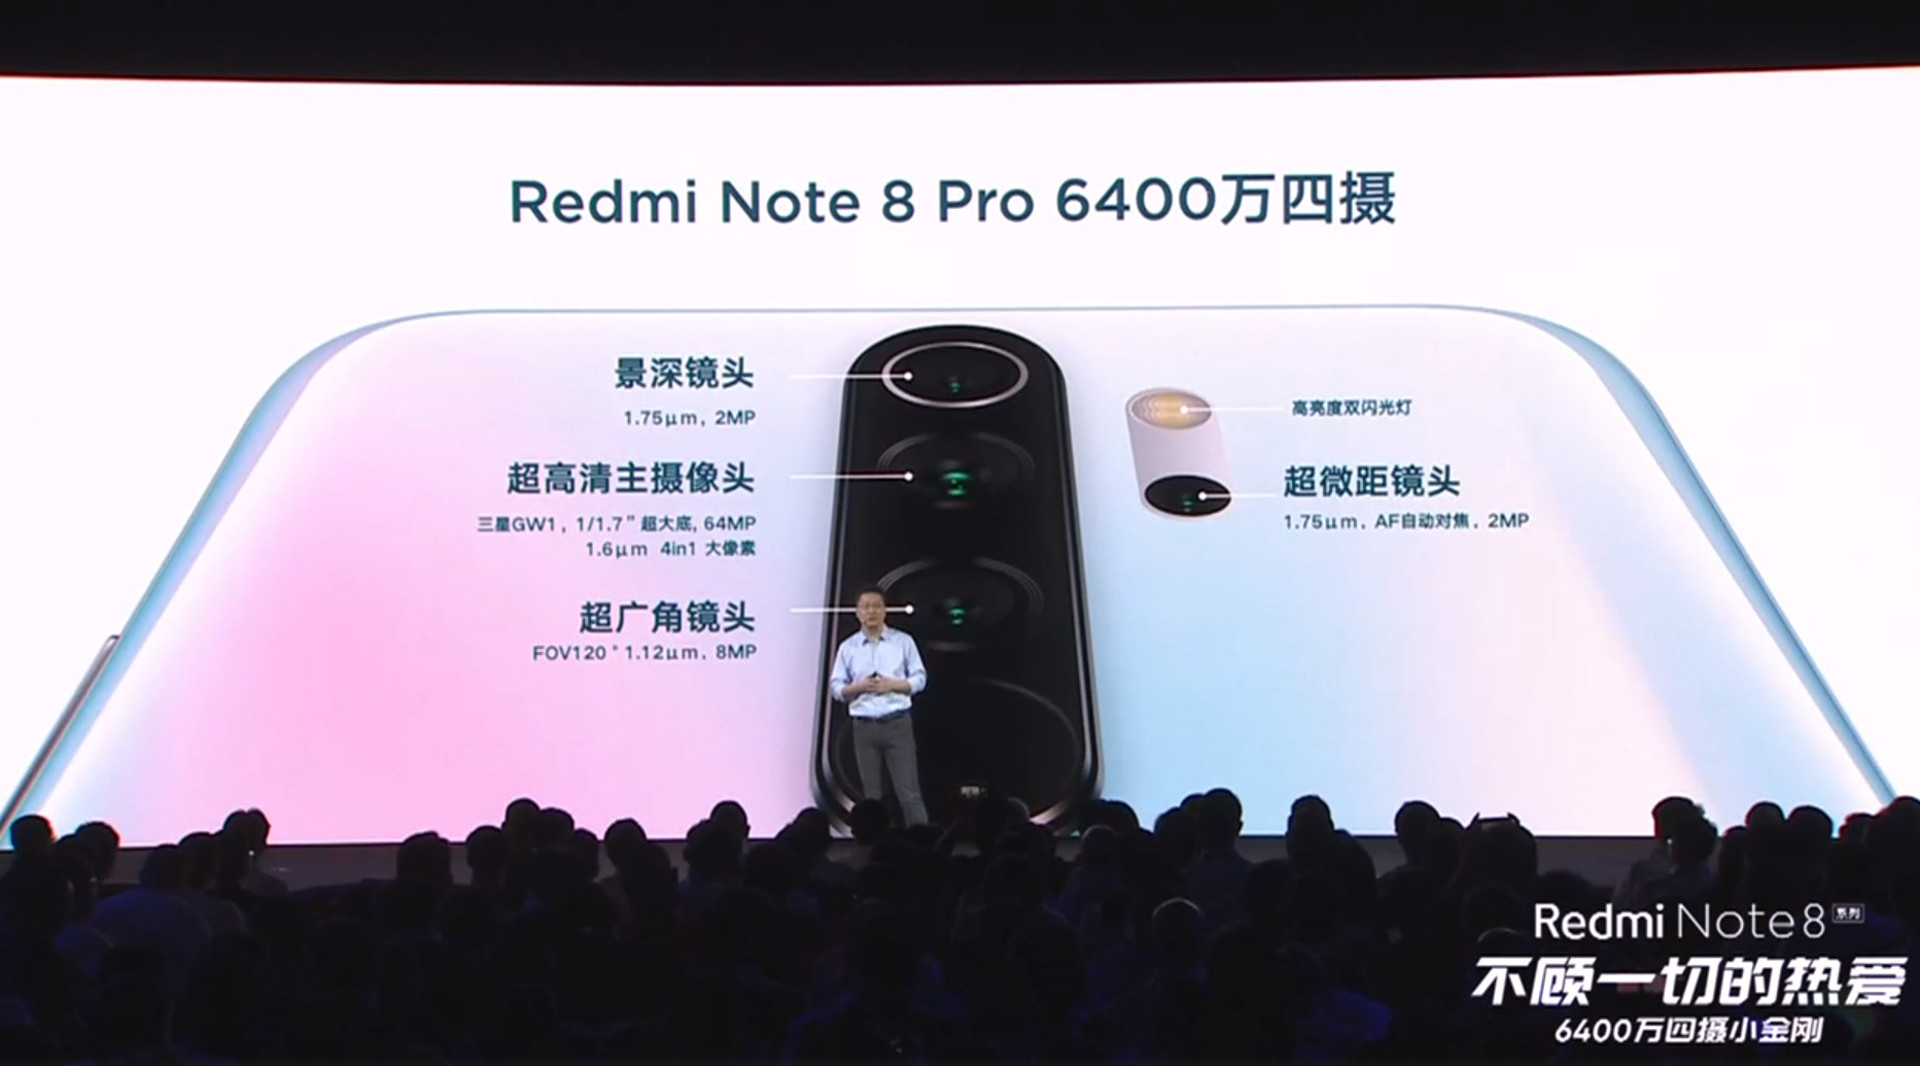 redmi note 8 pro rear cameras